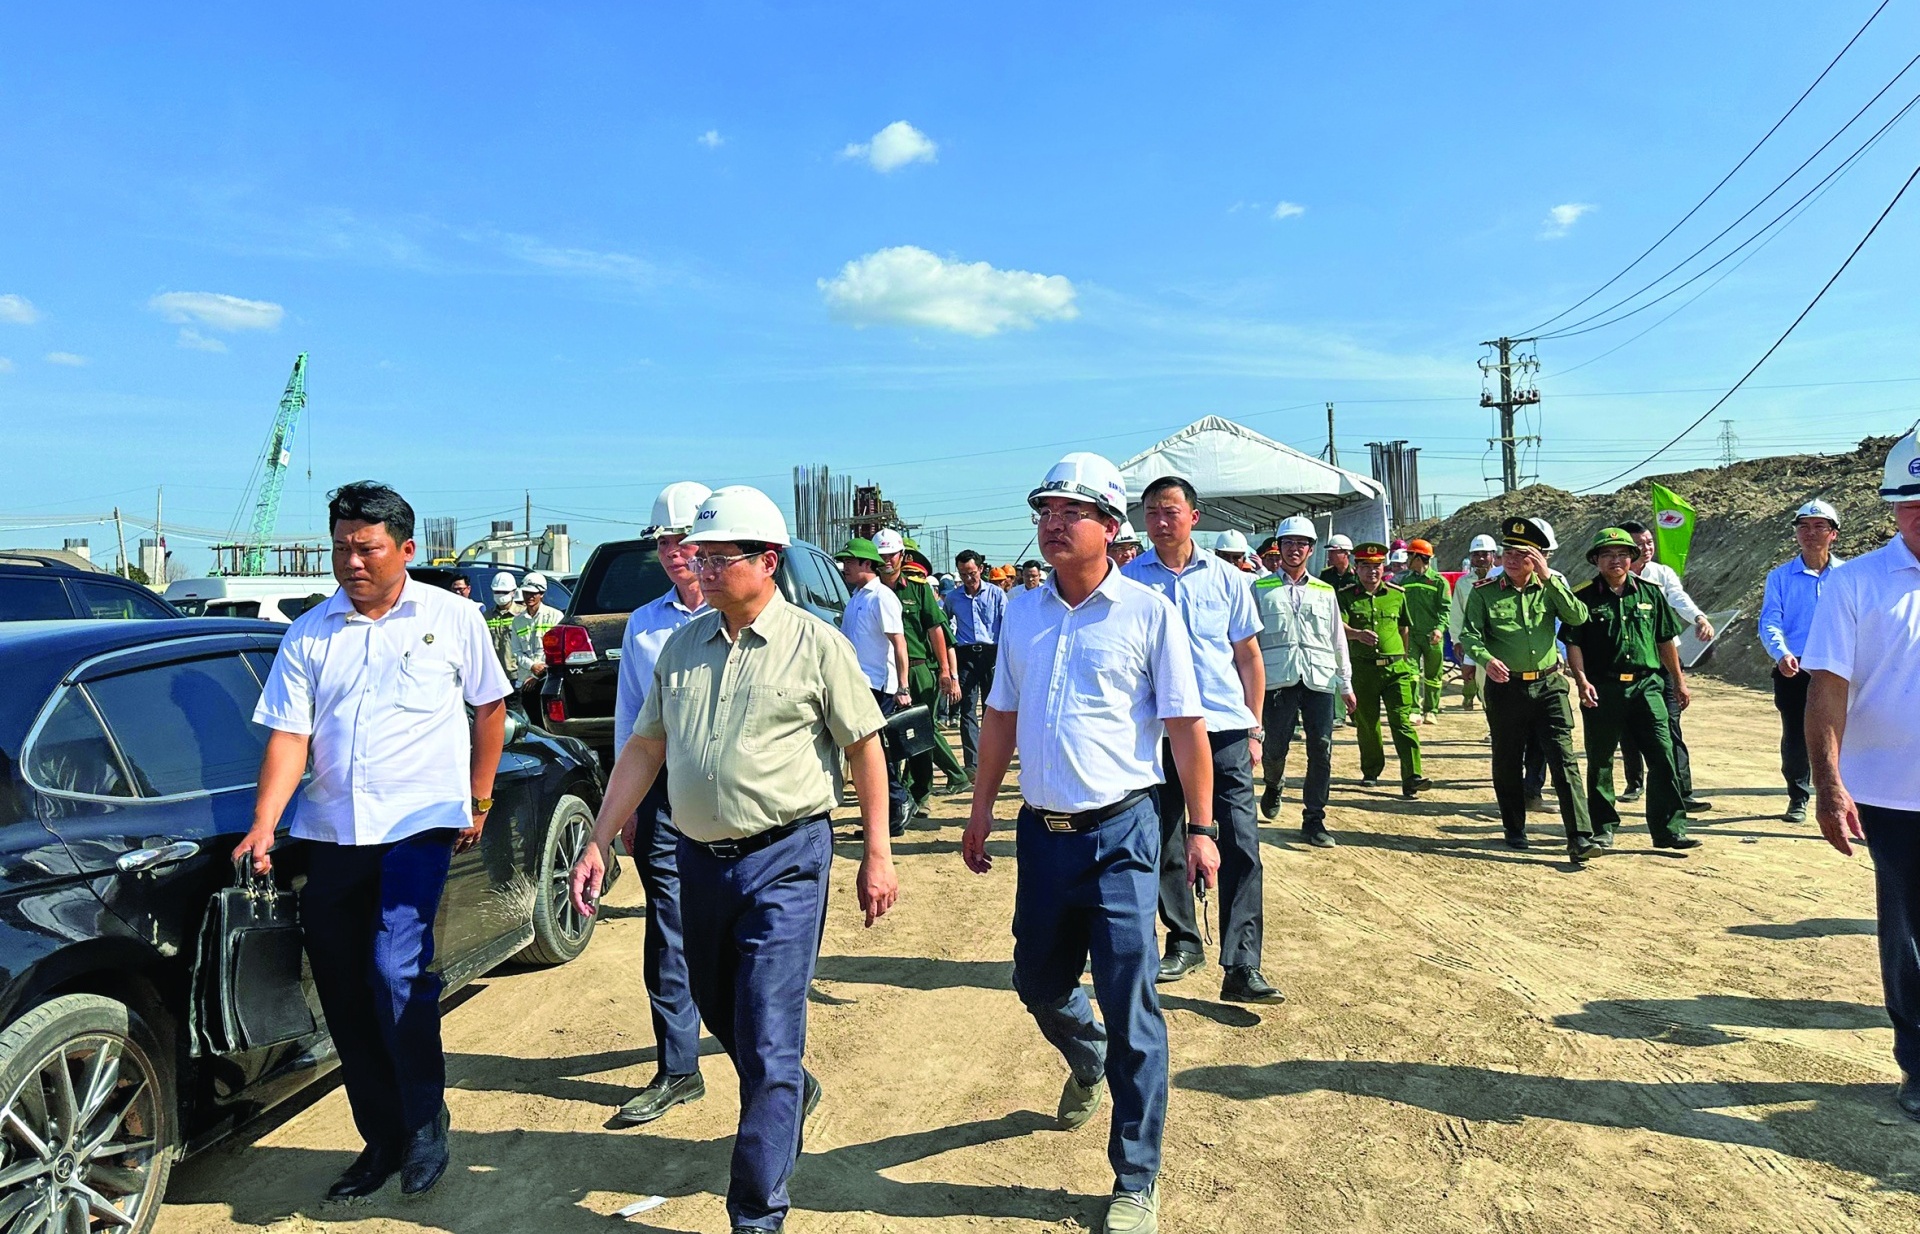 Ba Ria-Vung Tau showing enormous potential for development